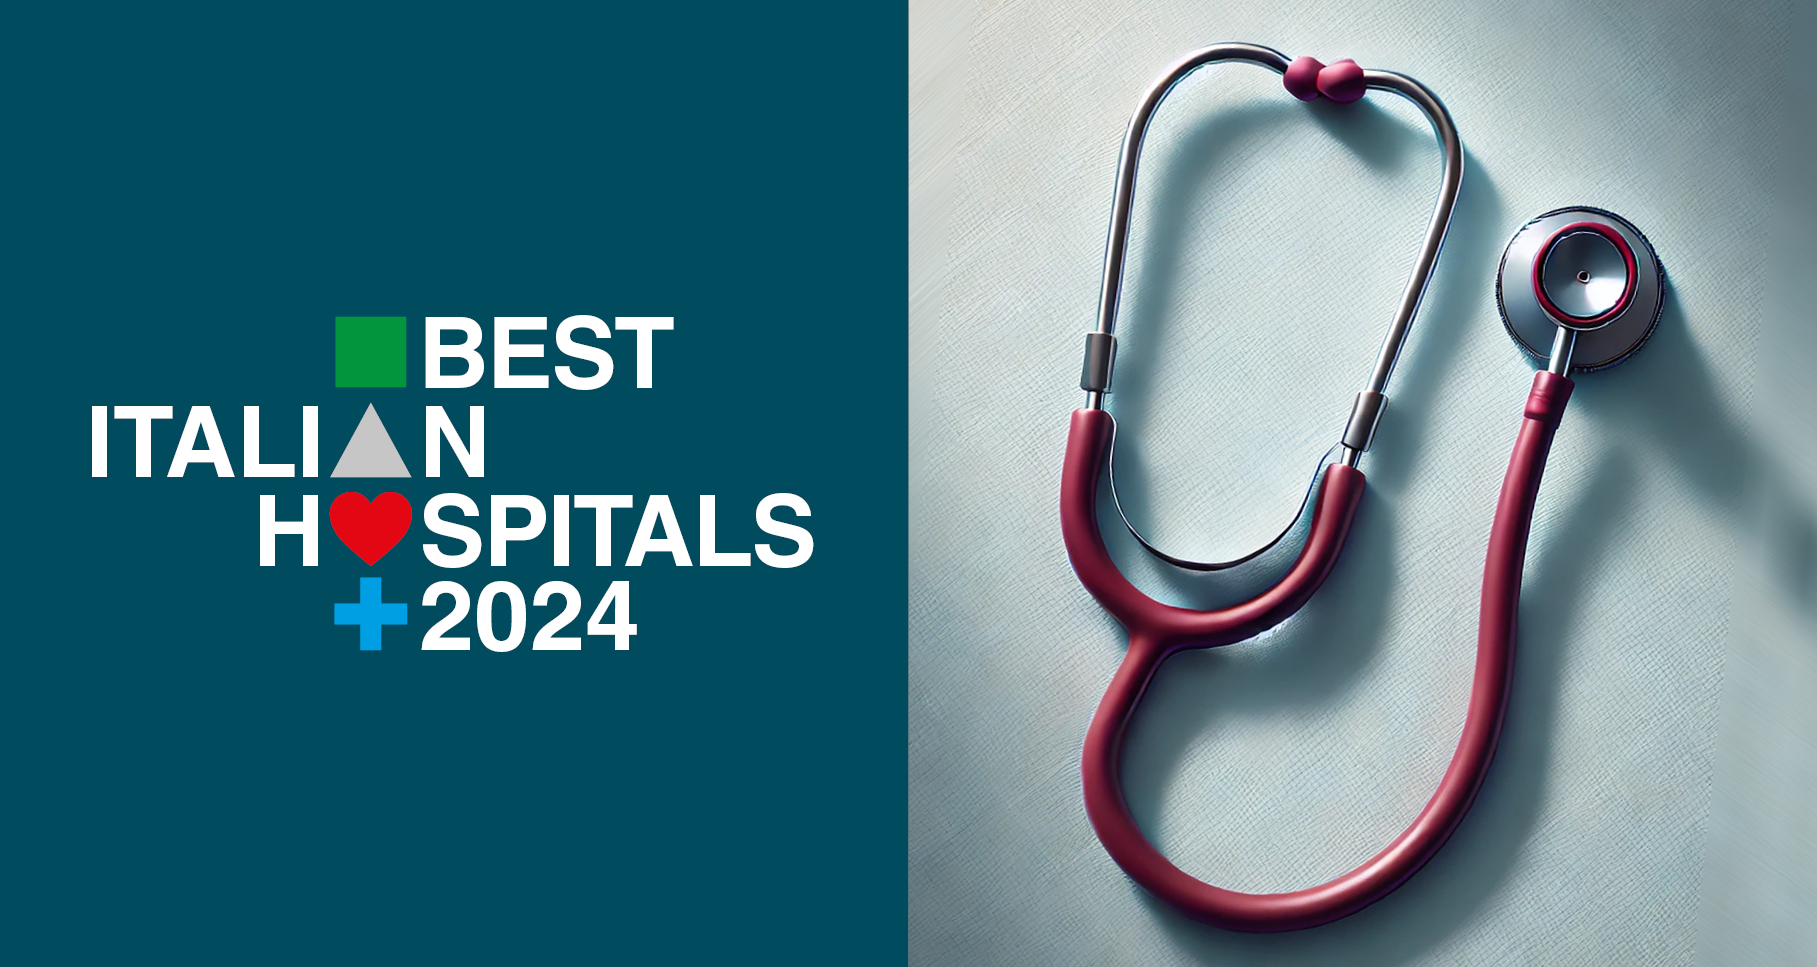 Best Italian Hospitals